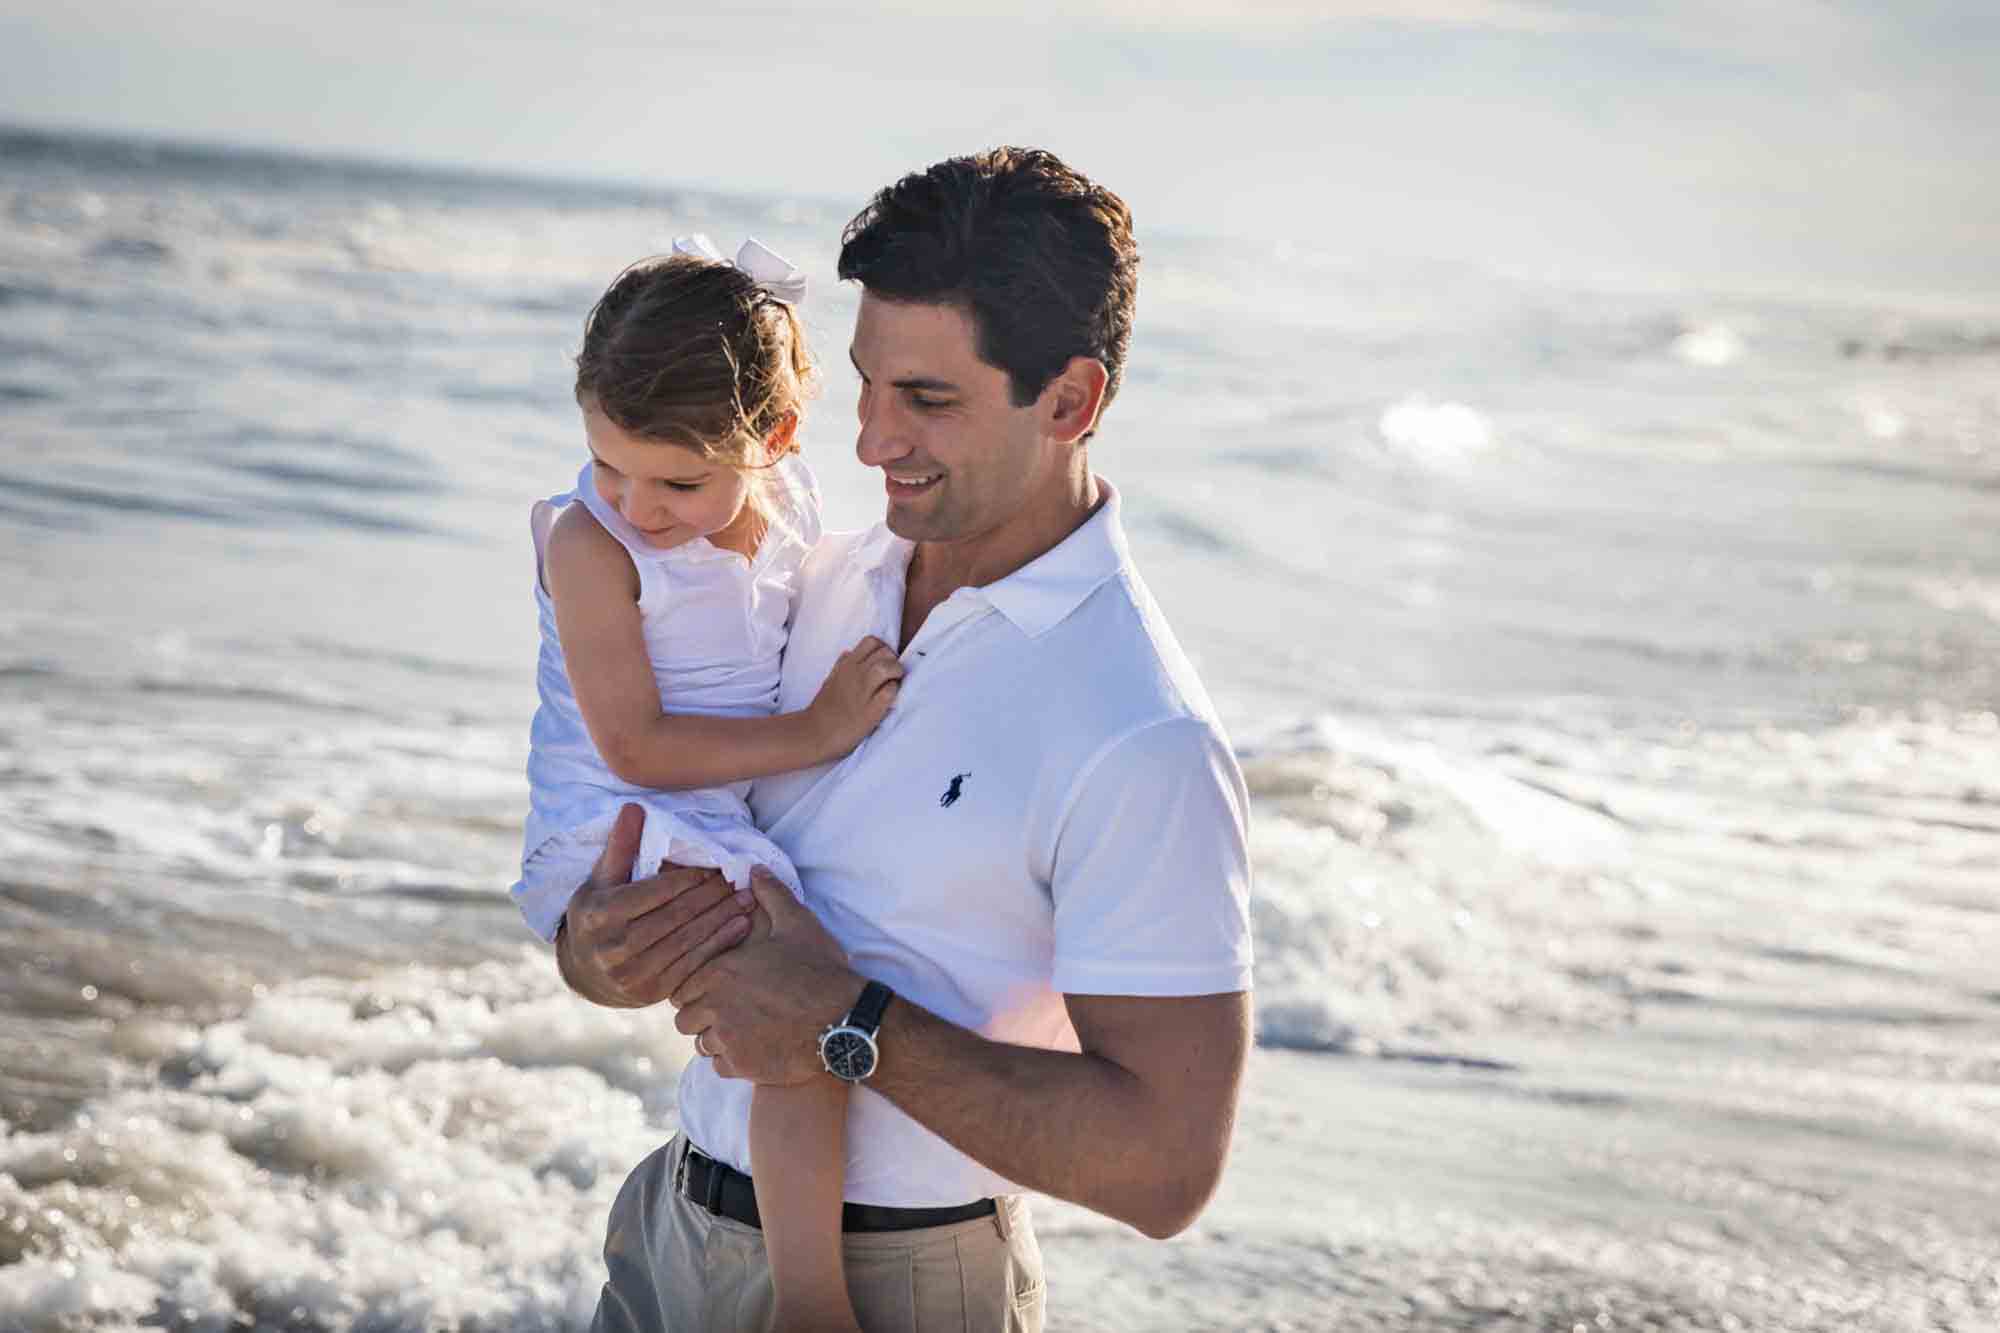 Fort Tilden beach family portrait of father holding small girl in ocean